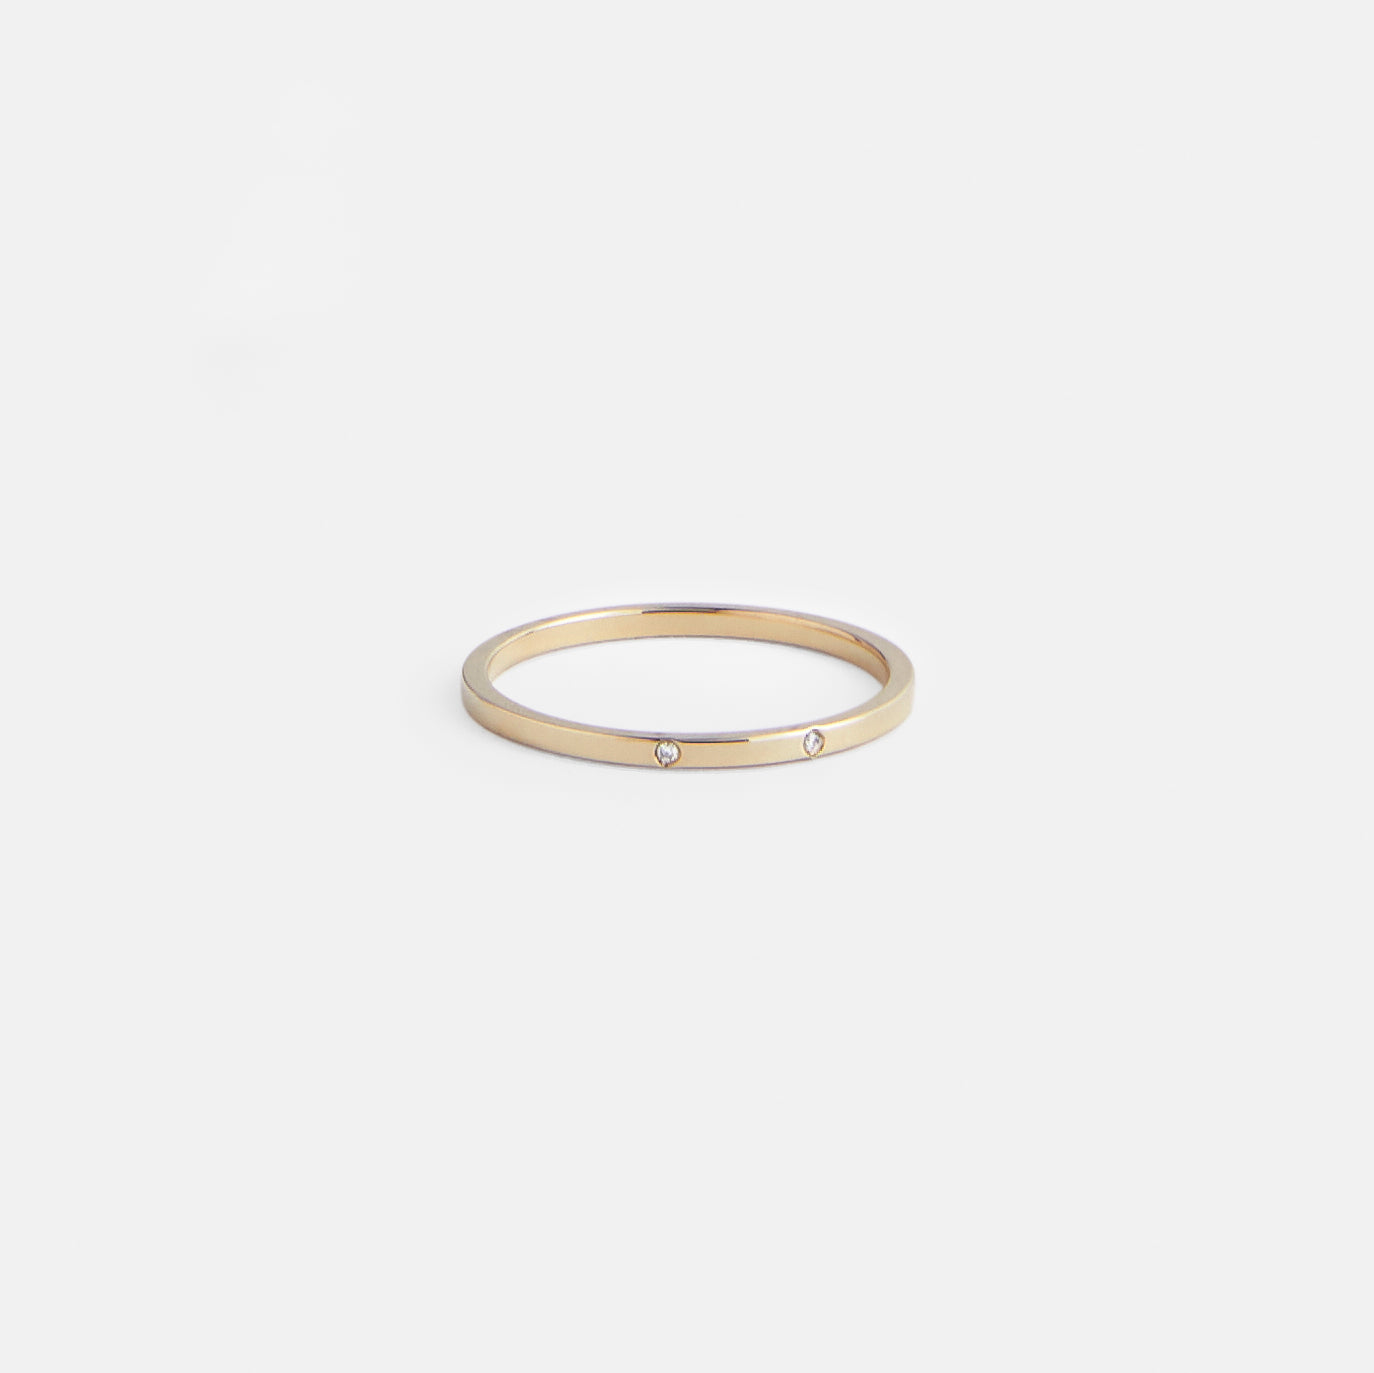 Sarala Minimalist Ring in 14k Gold set with White Diamonds By SHW Fine Jewelry NYC